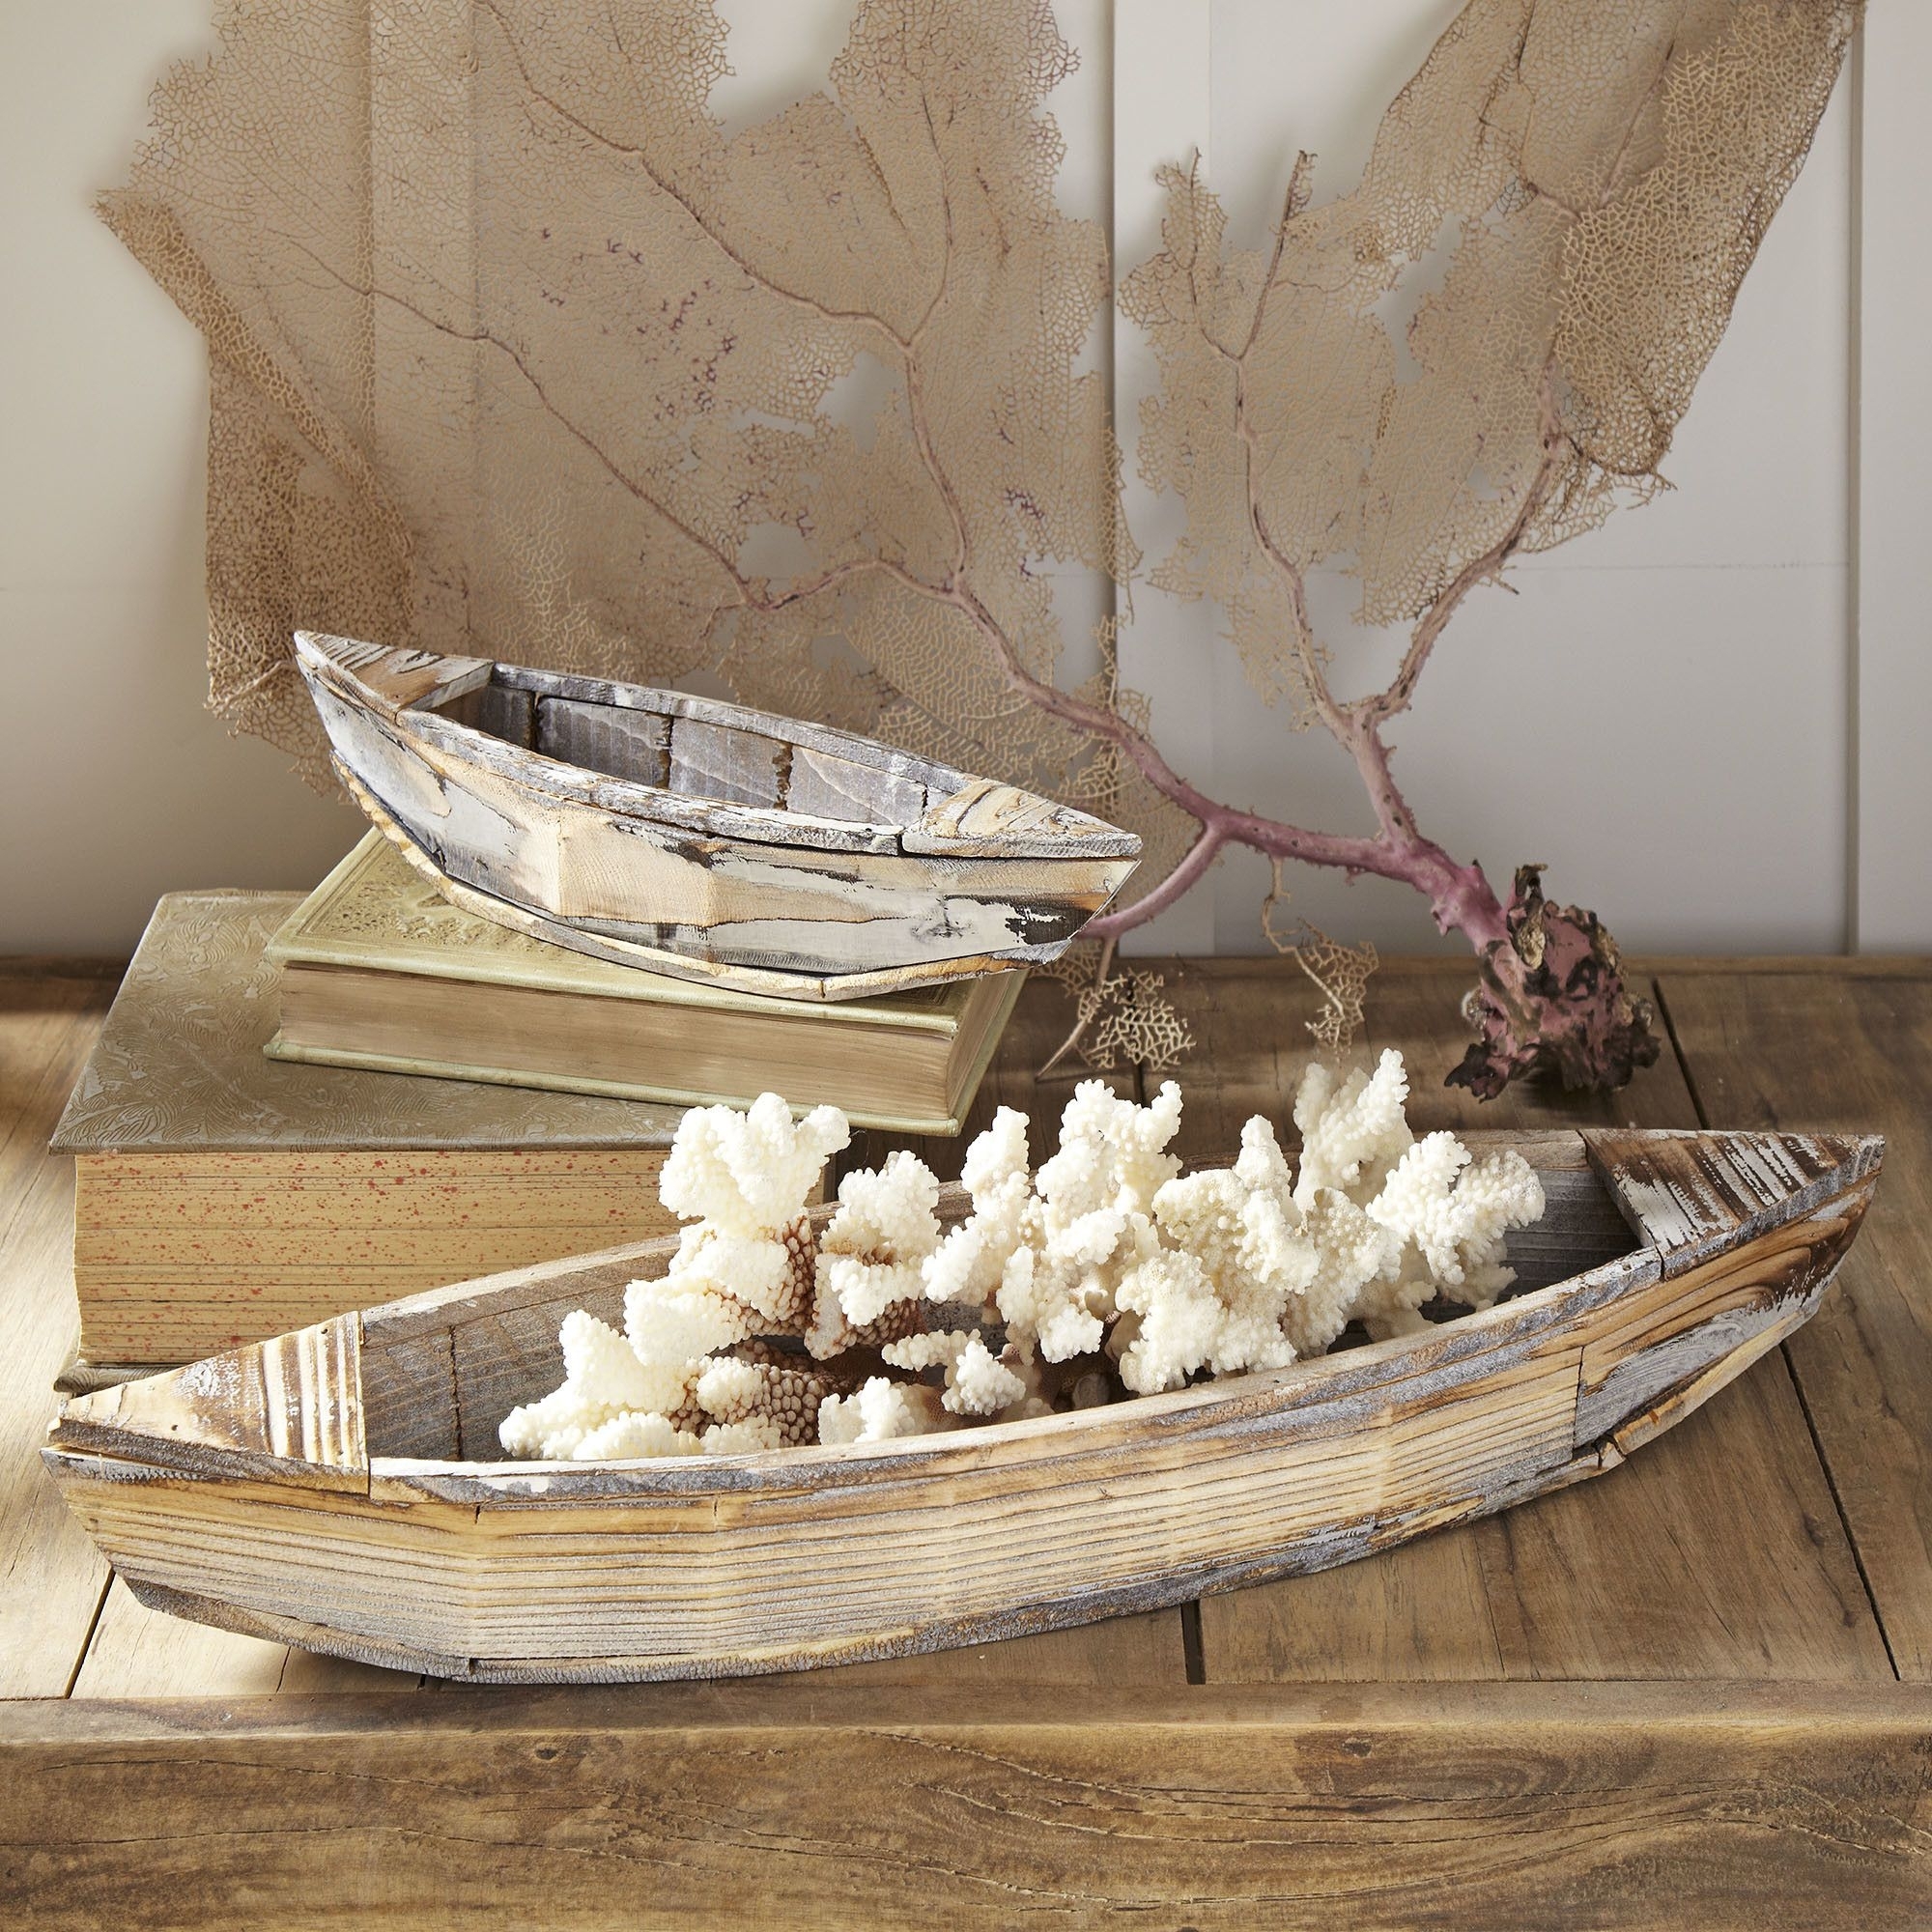 Wooden Boat Decor - VisualHunt